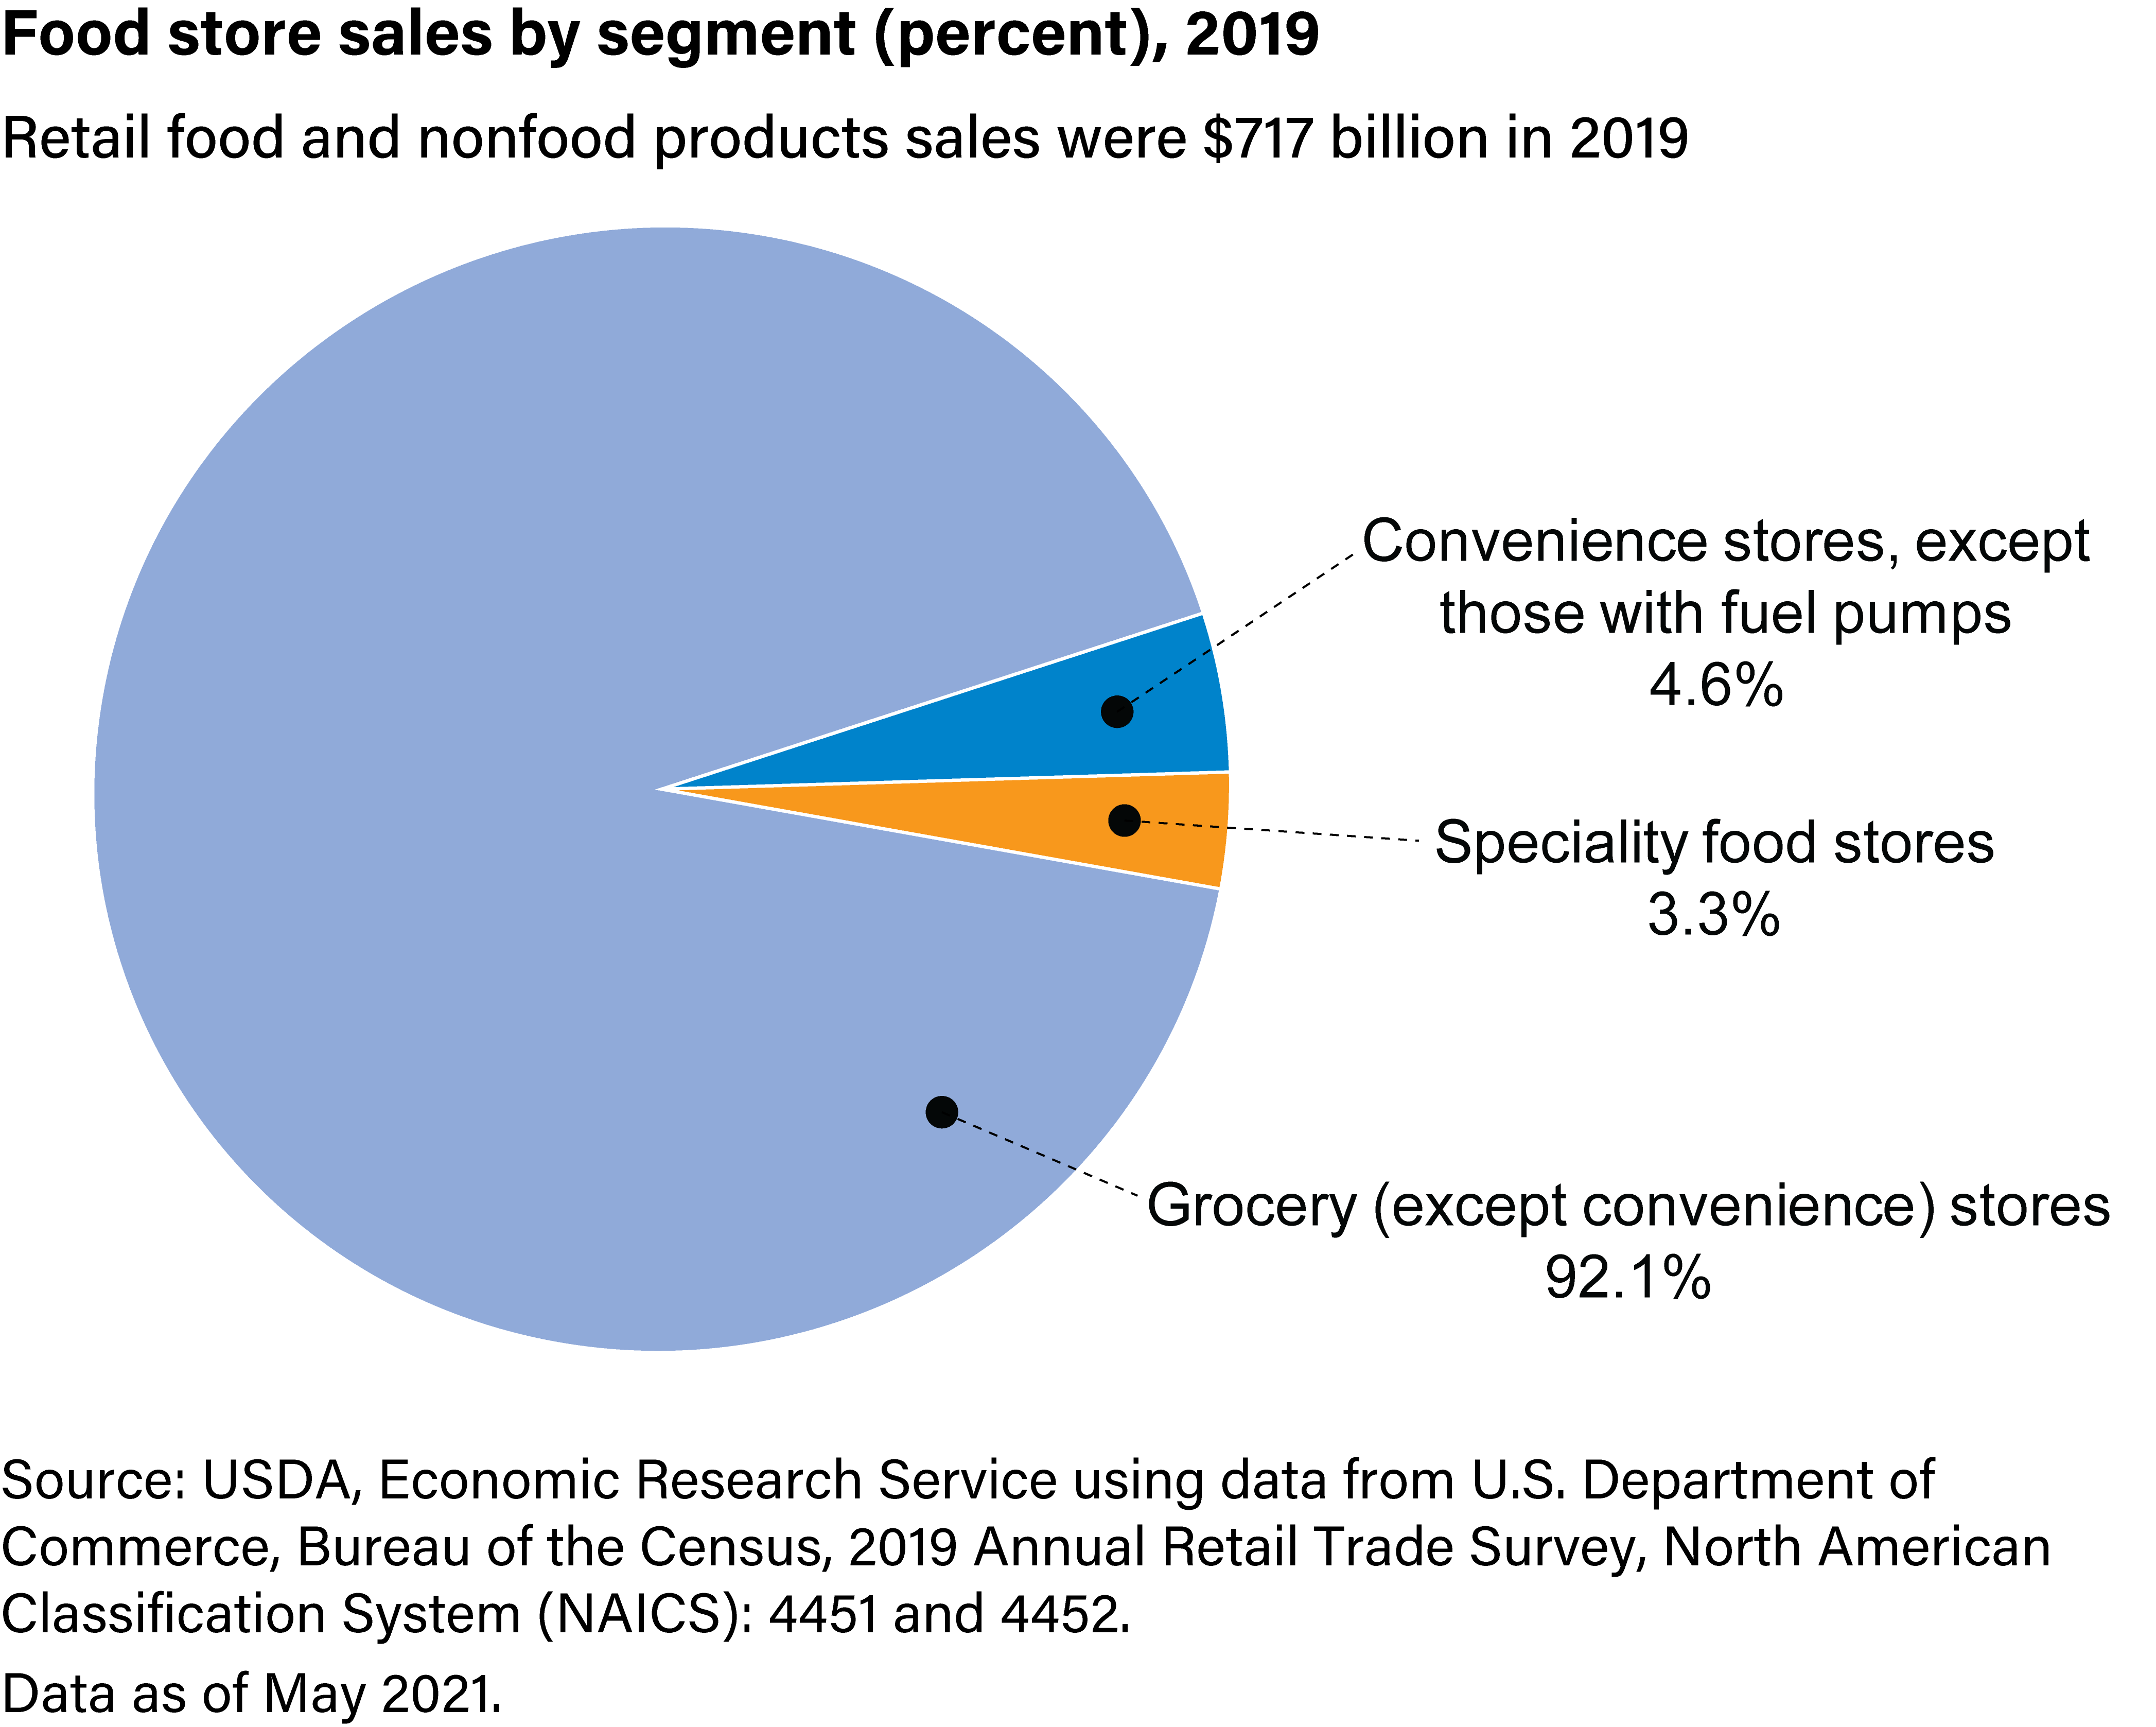 Economical food sales